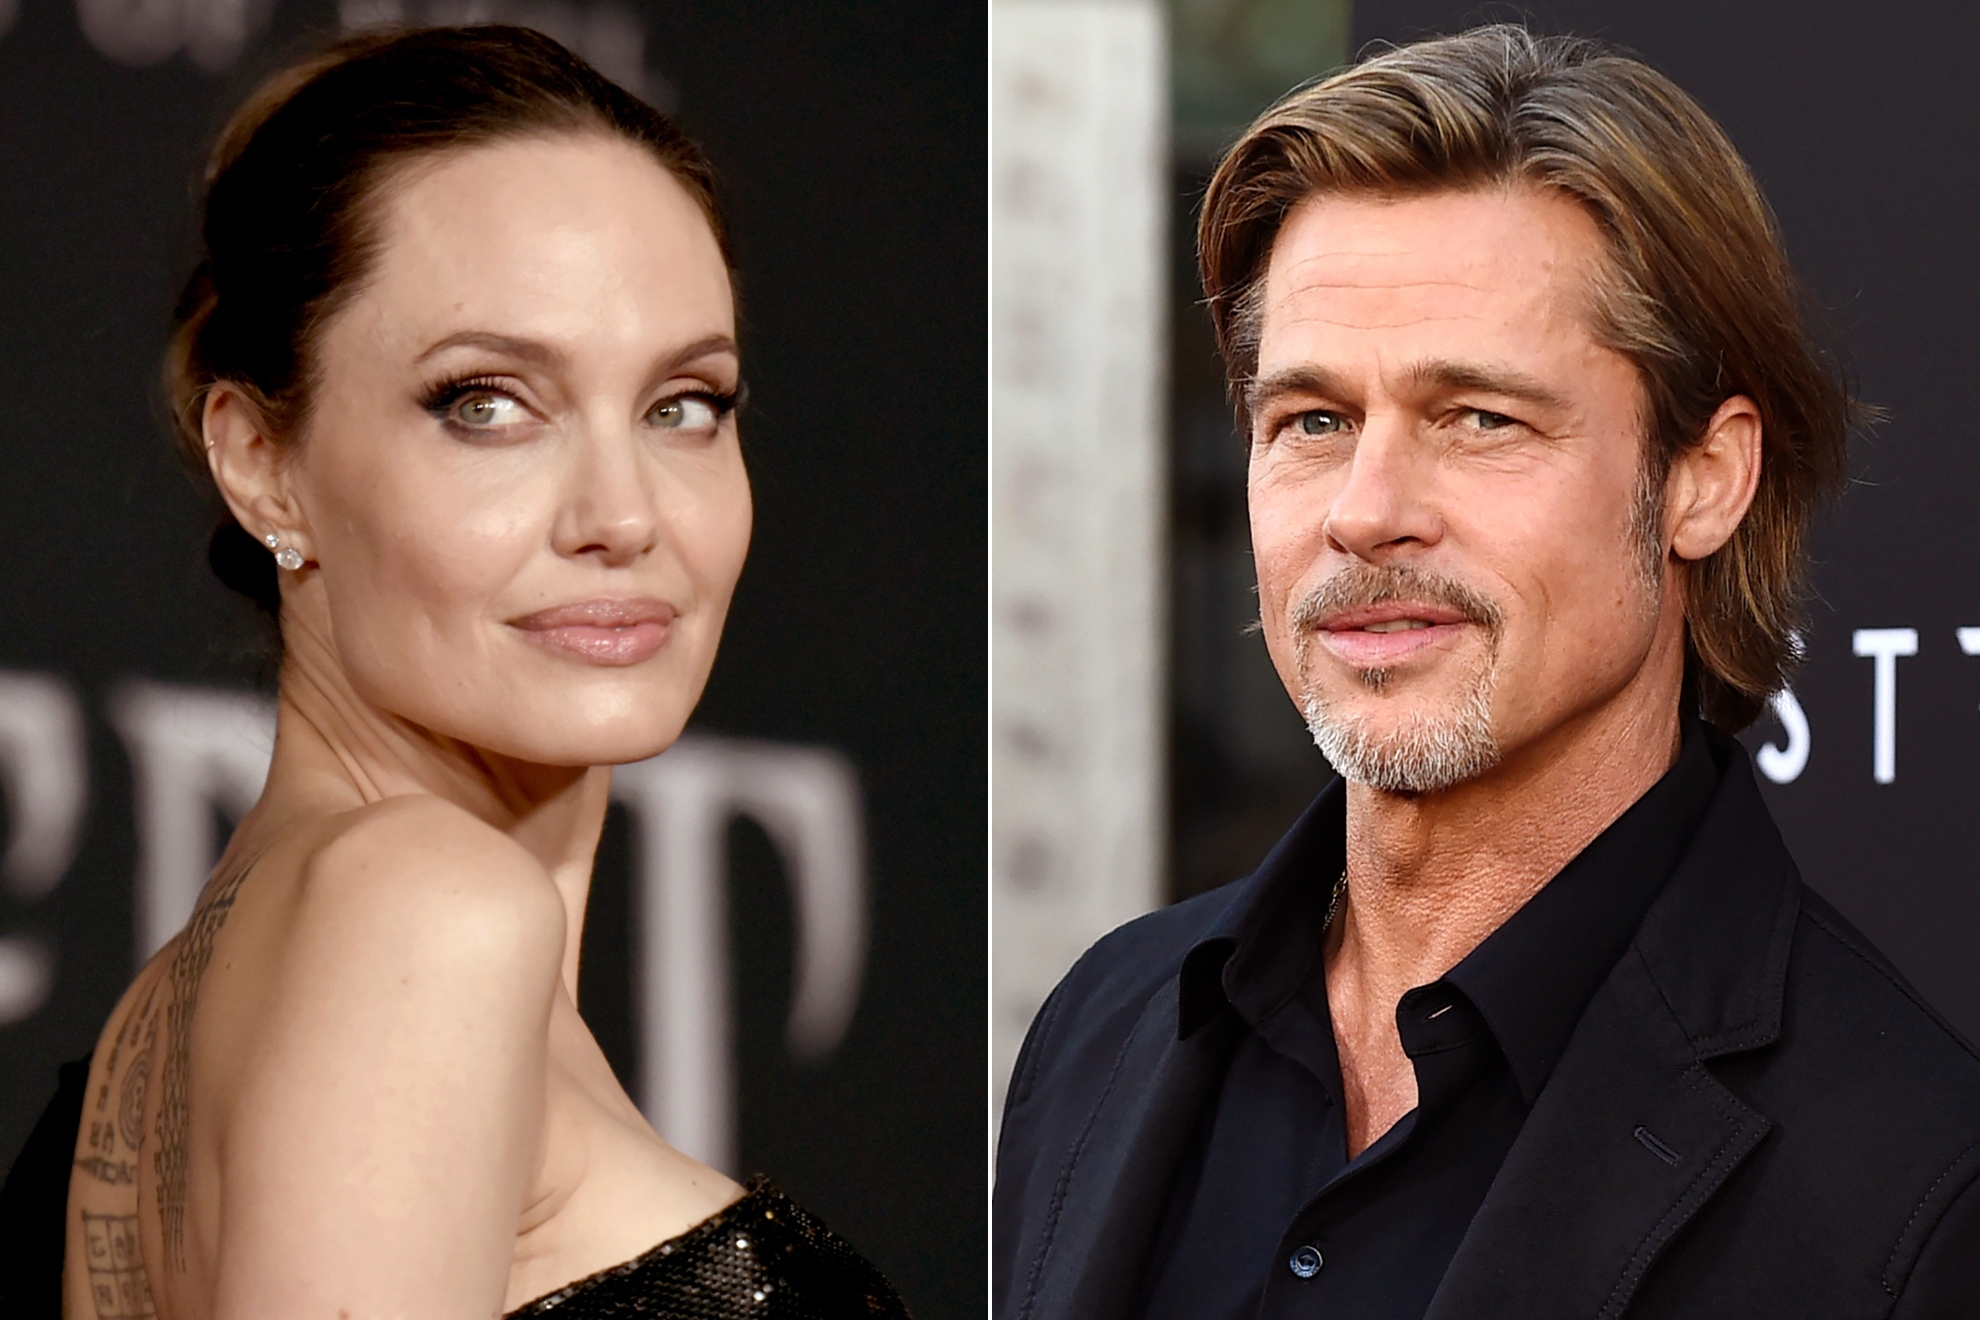 Mashup image of Angelina Jolie and Brad Pitt